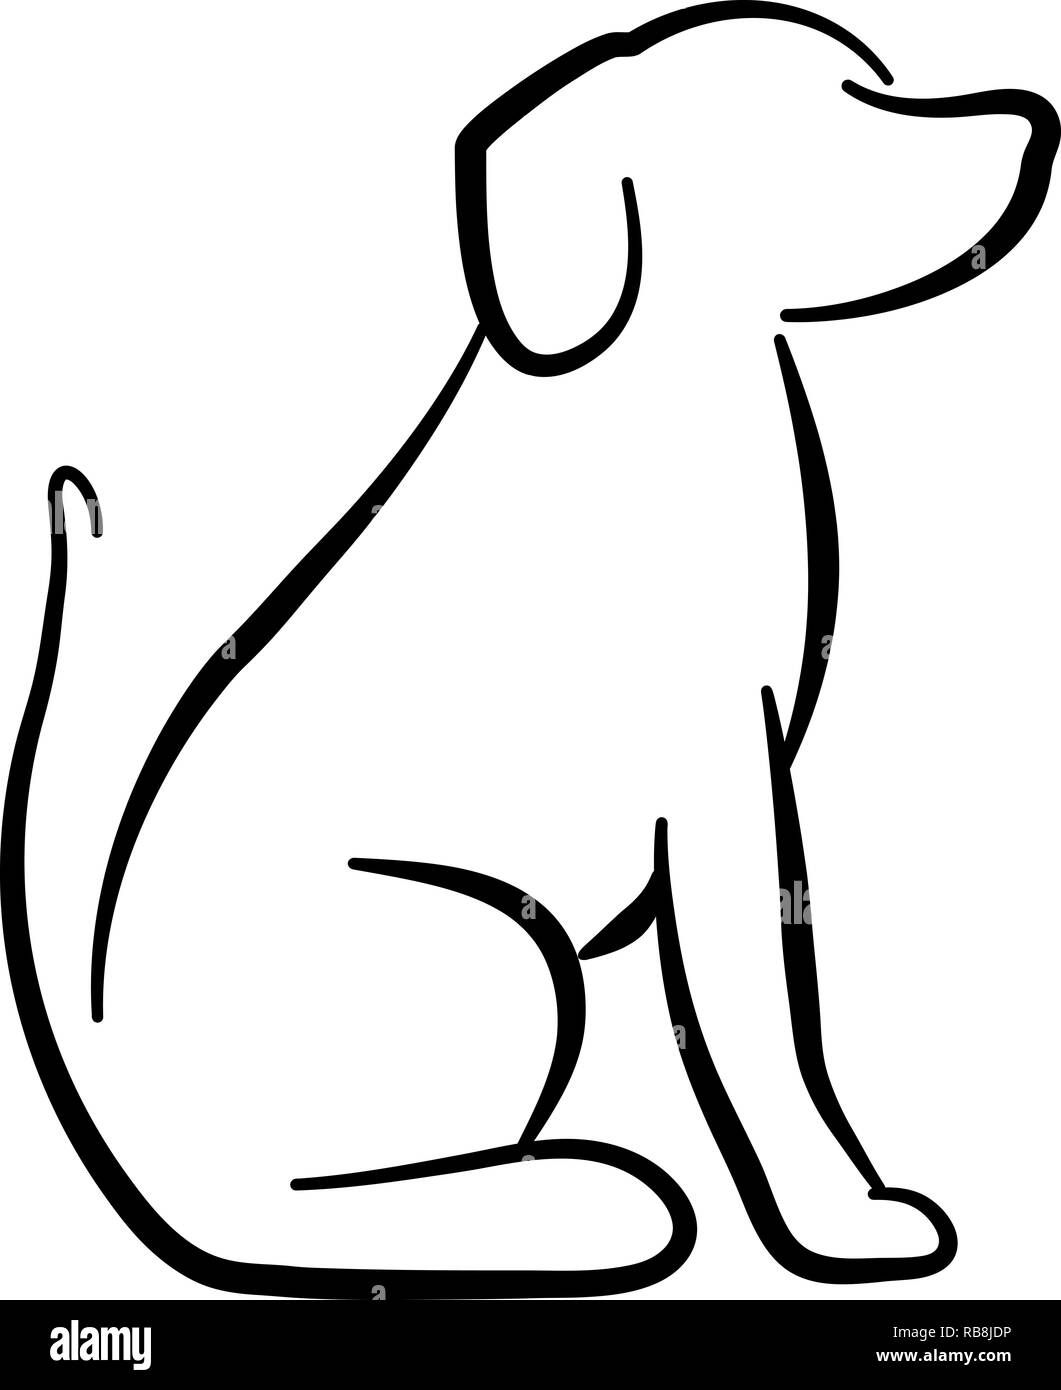 Perro sentado silueta fotografías e imágenes de alta resolución - Alamy